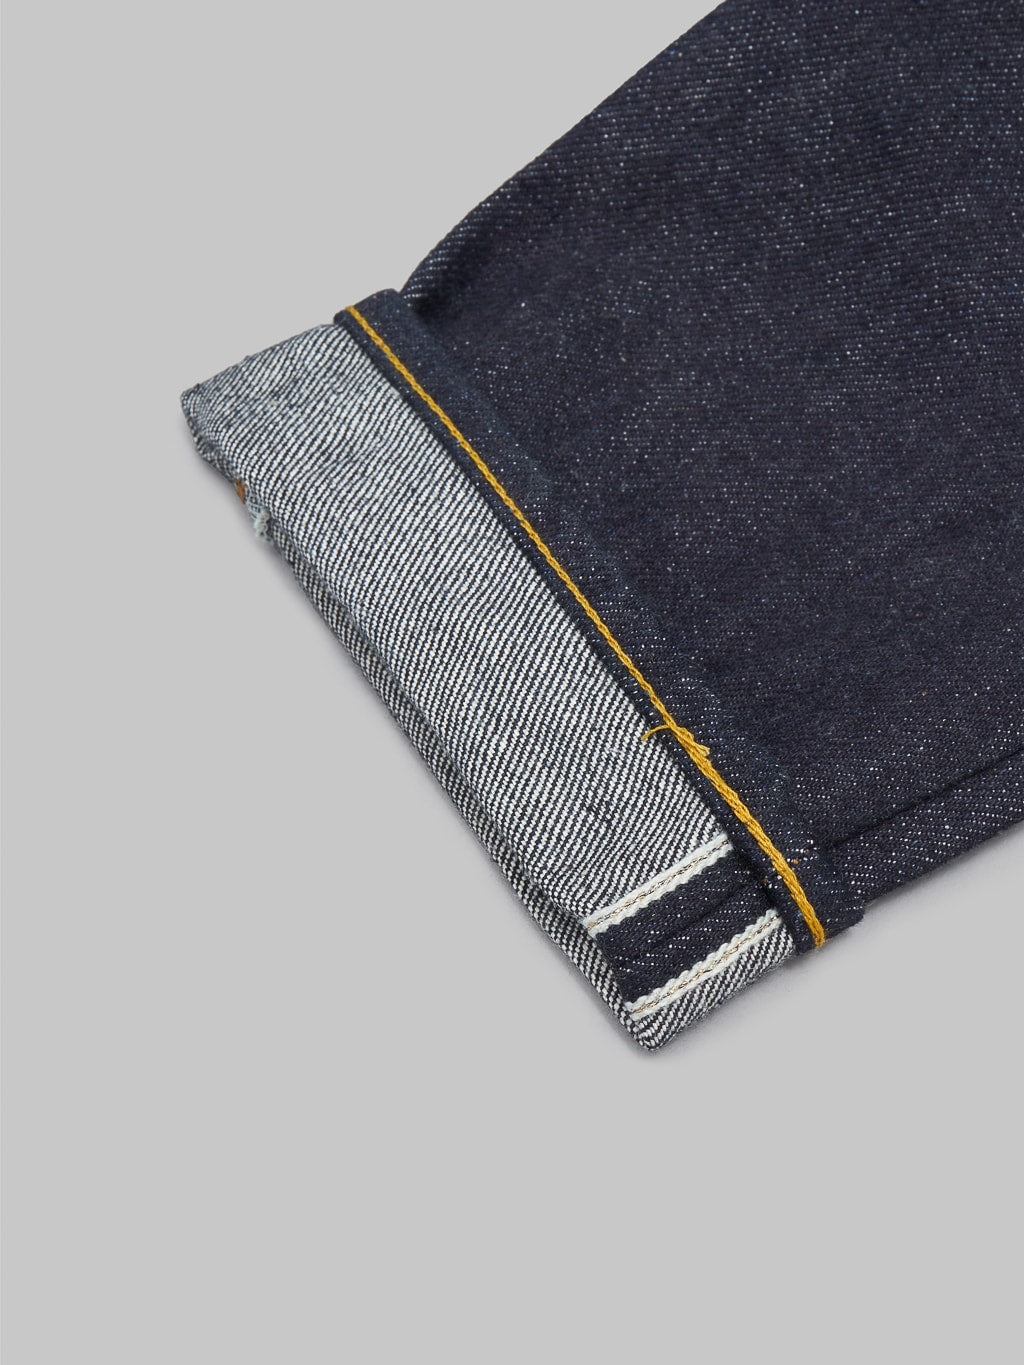 samurai jeans s710xx 25oz 25th anniversary selvedge jeans selvedge closeup